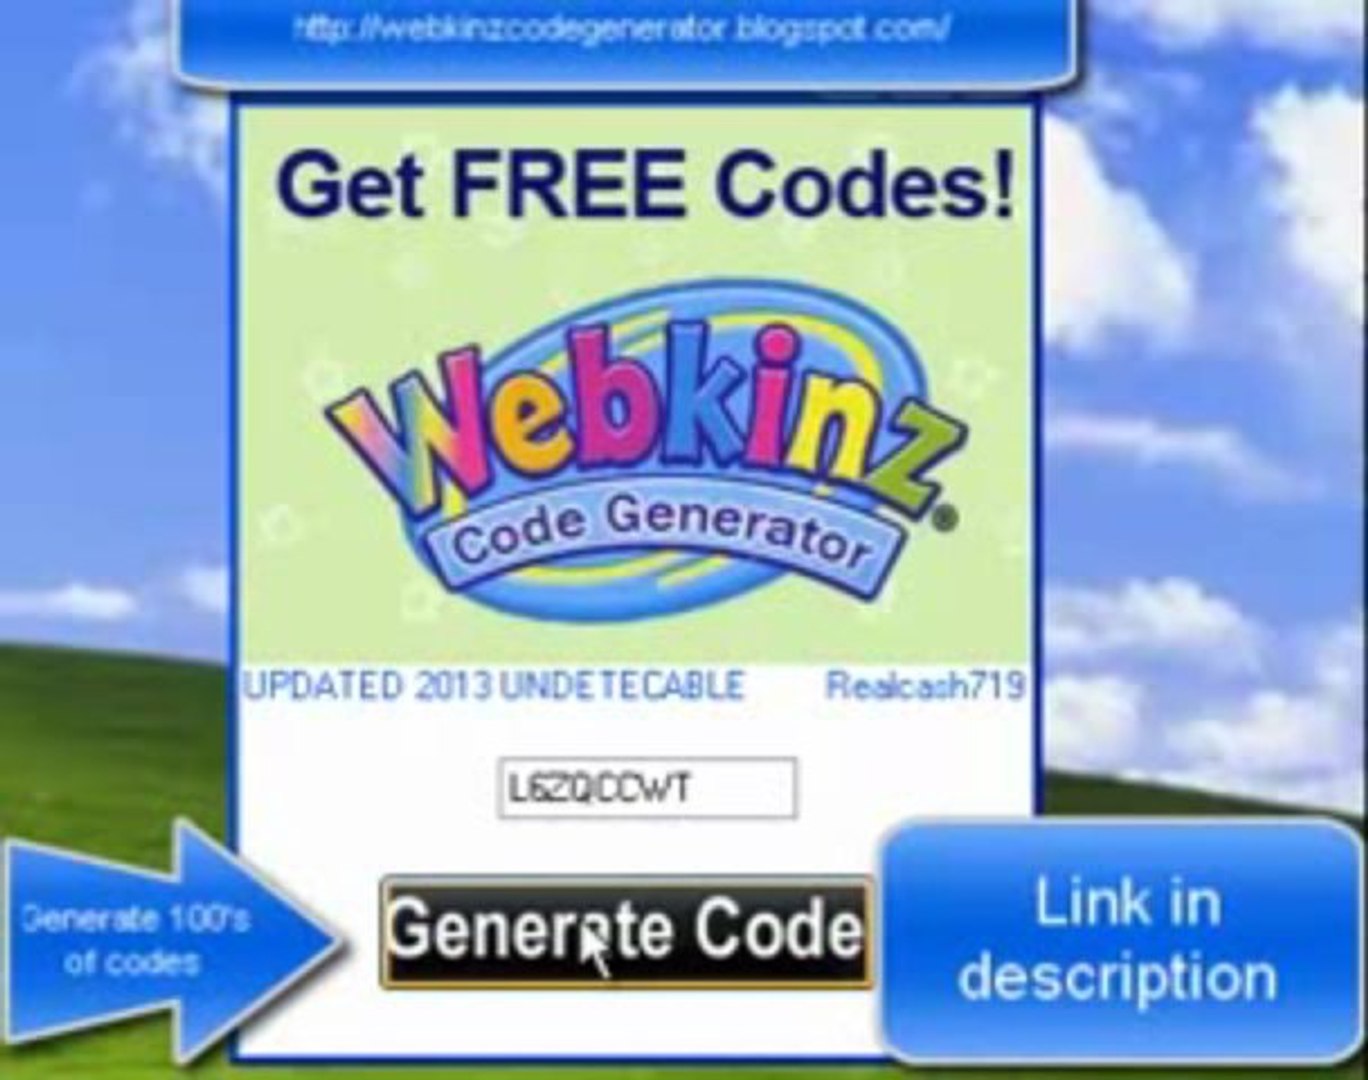 Free Webkinz Codes truedfile